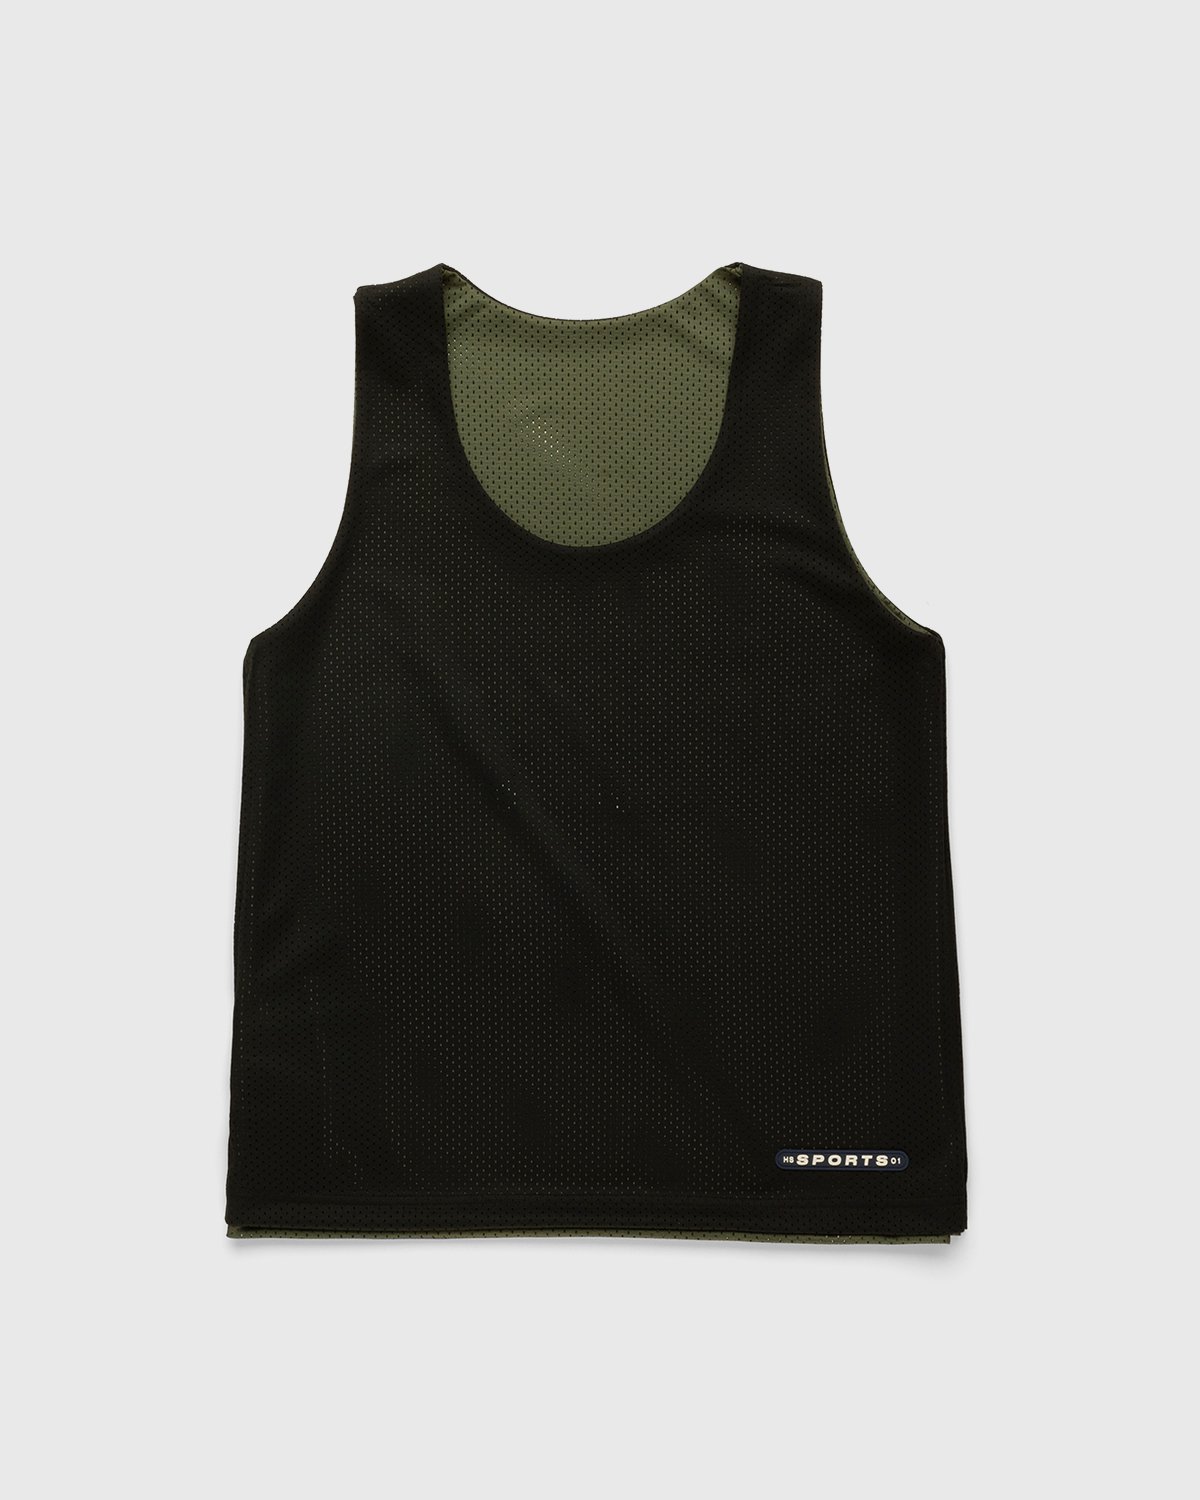 Highsnobiety - HS Sports Reversible Mesh Tank Top Black/Khaki - Clothing - Green - Image 3